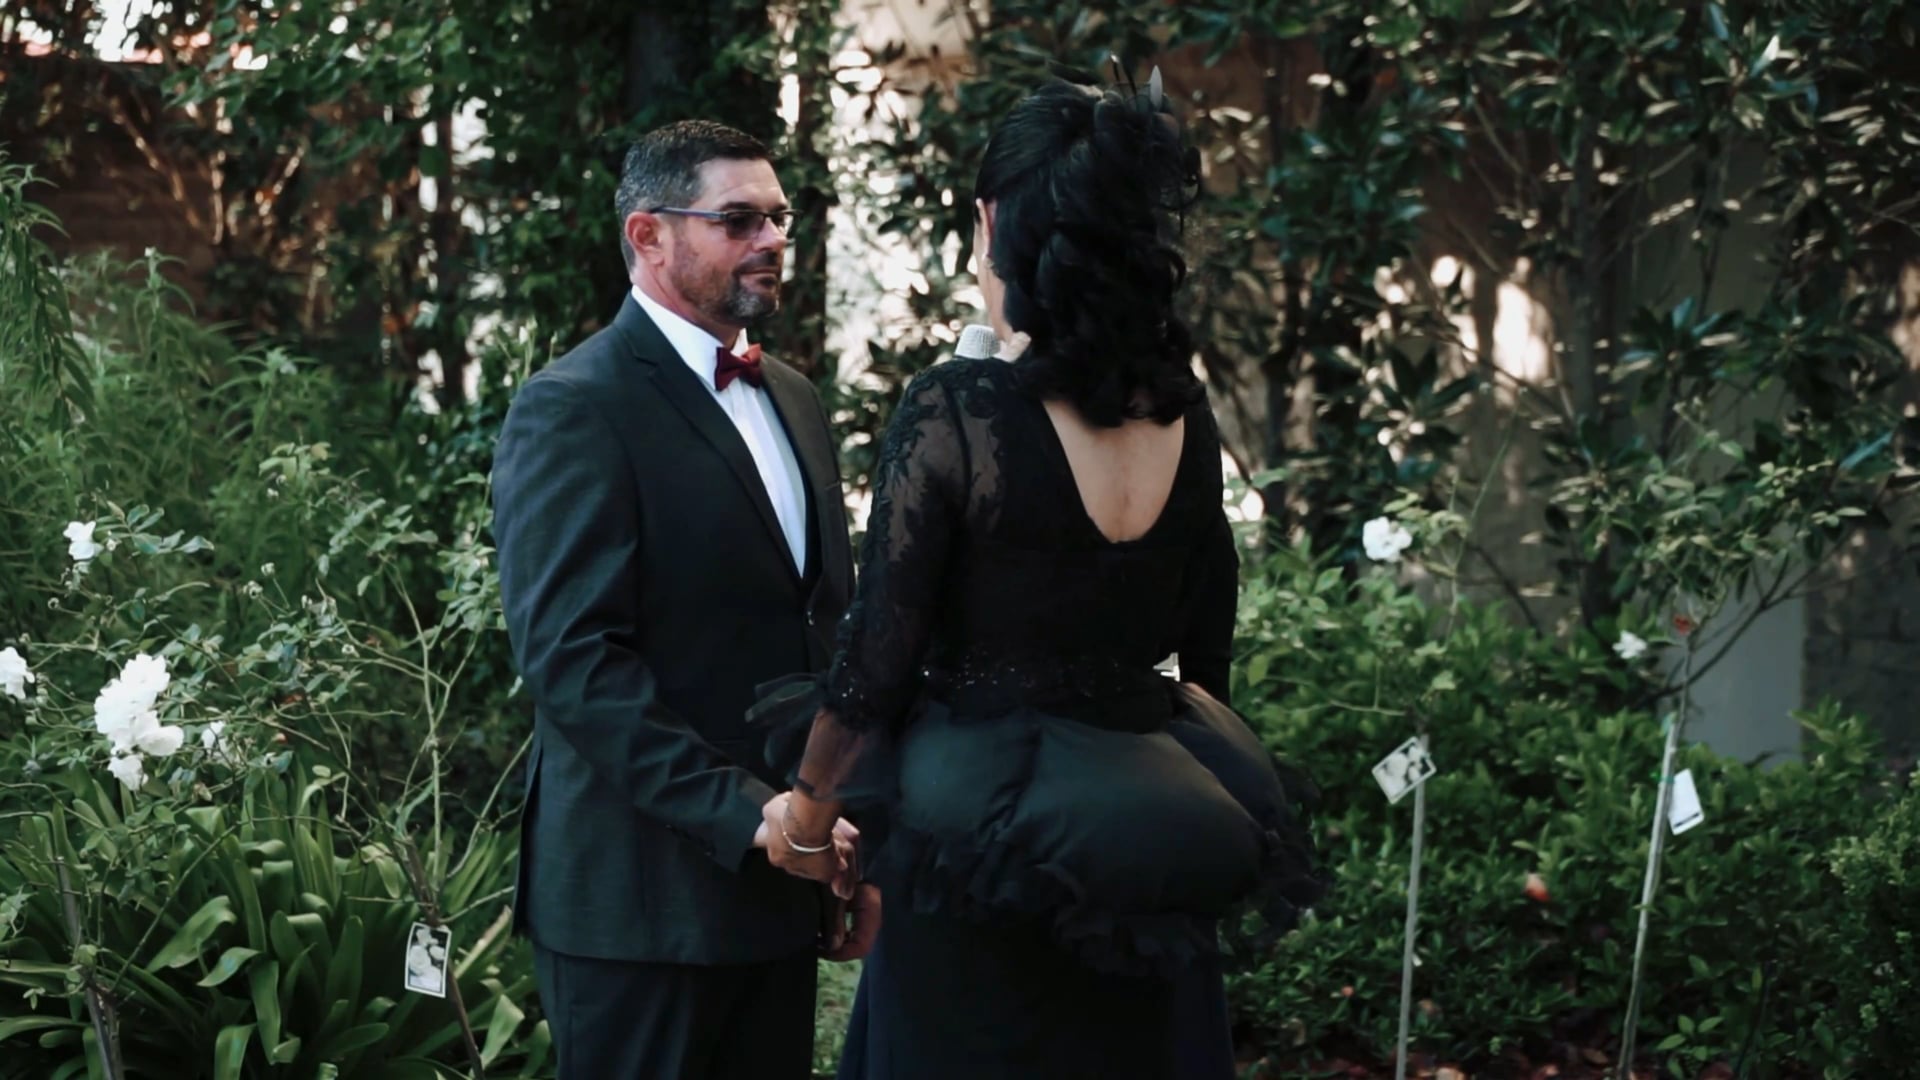 Matt & Jameela Wedding Highlight Video 24.4.21